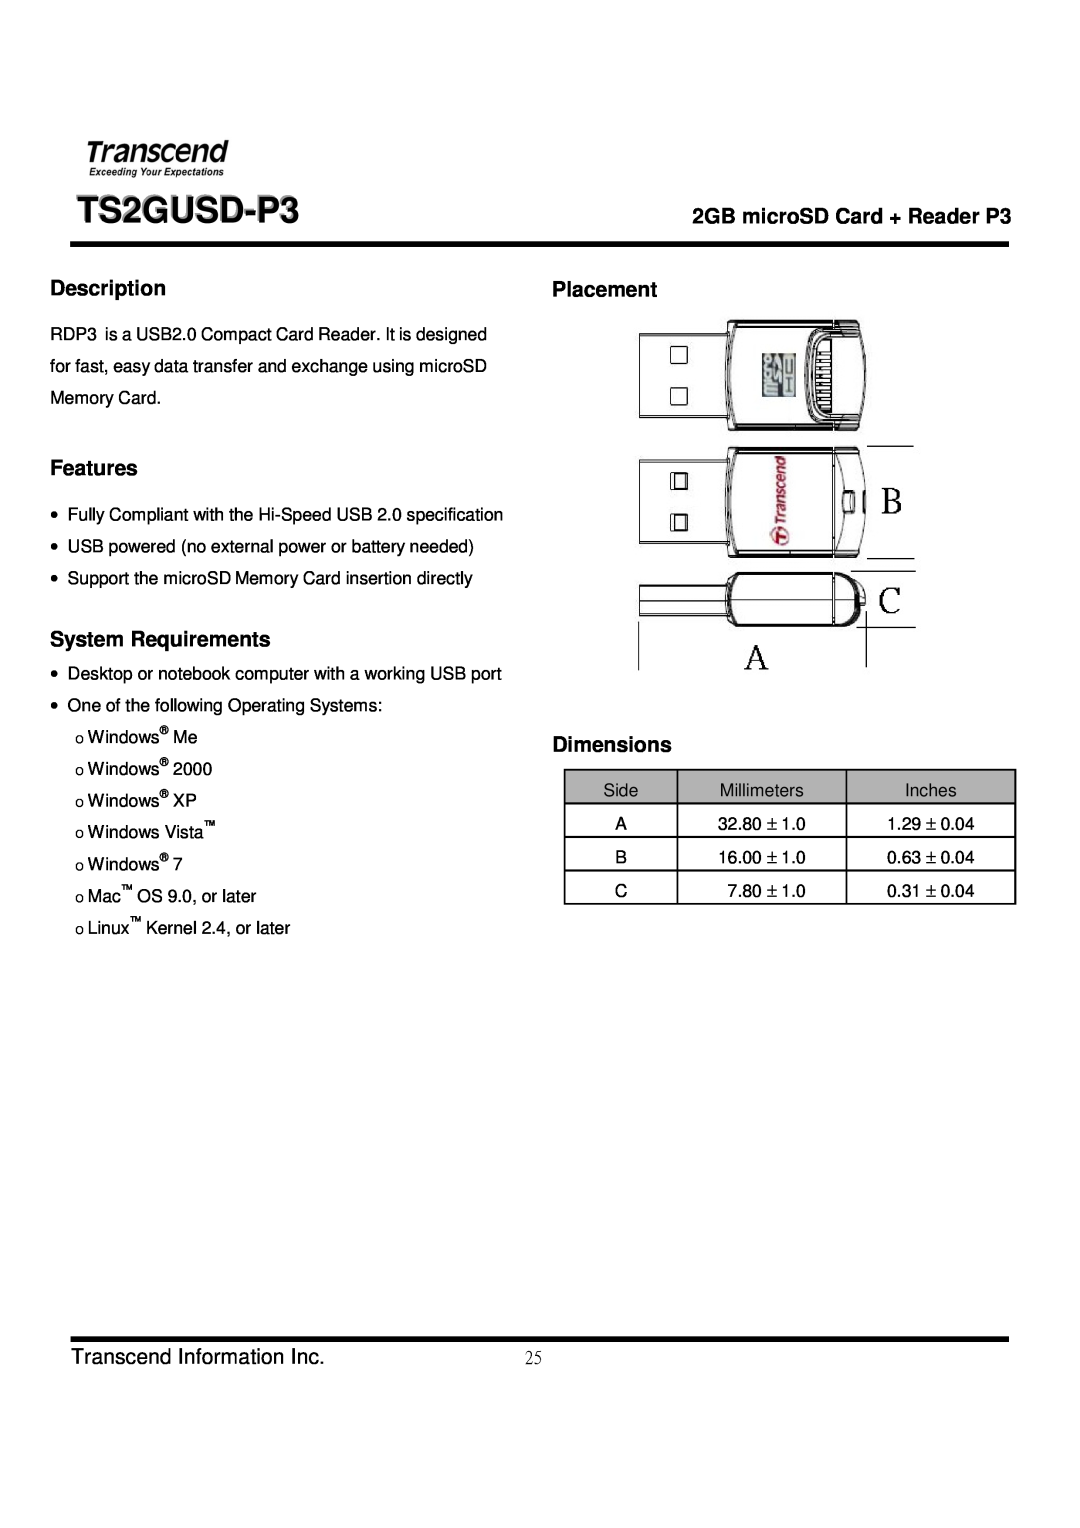 Transcend Information TS2GUSD-P3 manual Description, Features, System Requirements, Placement Dimensions 